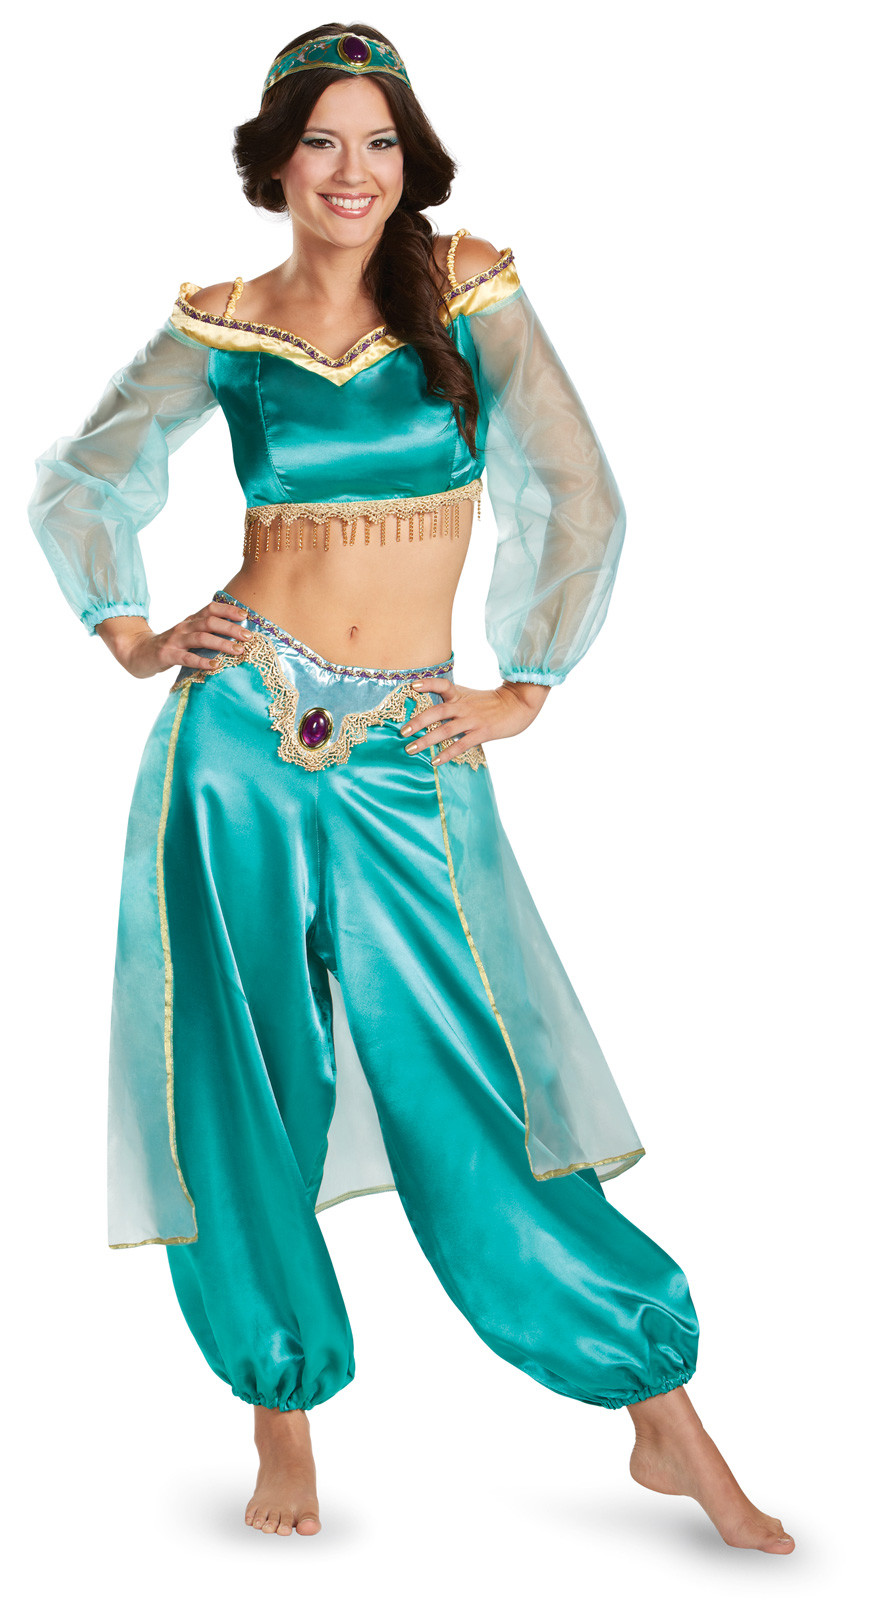 Best ideas about Princess Jasmine DIY Costume
. Save or Pin Disney Princess Jasmine Halloween Costumes For Girls Now.